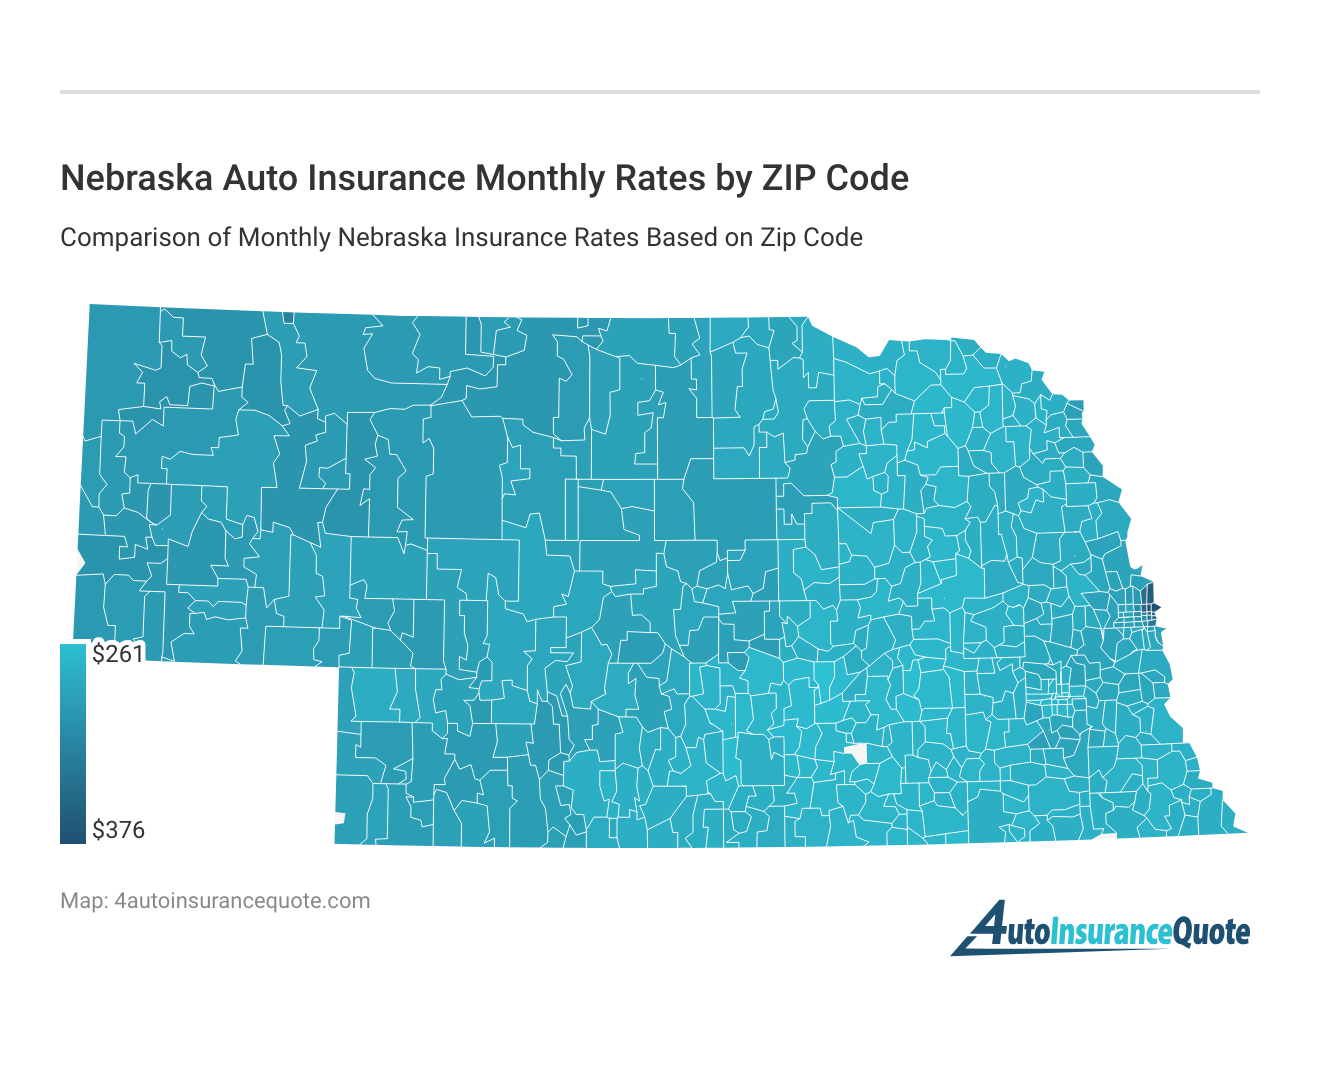 <h3>Nebraska Auto Insurance Monthly Rates by ZIP Code</h3>